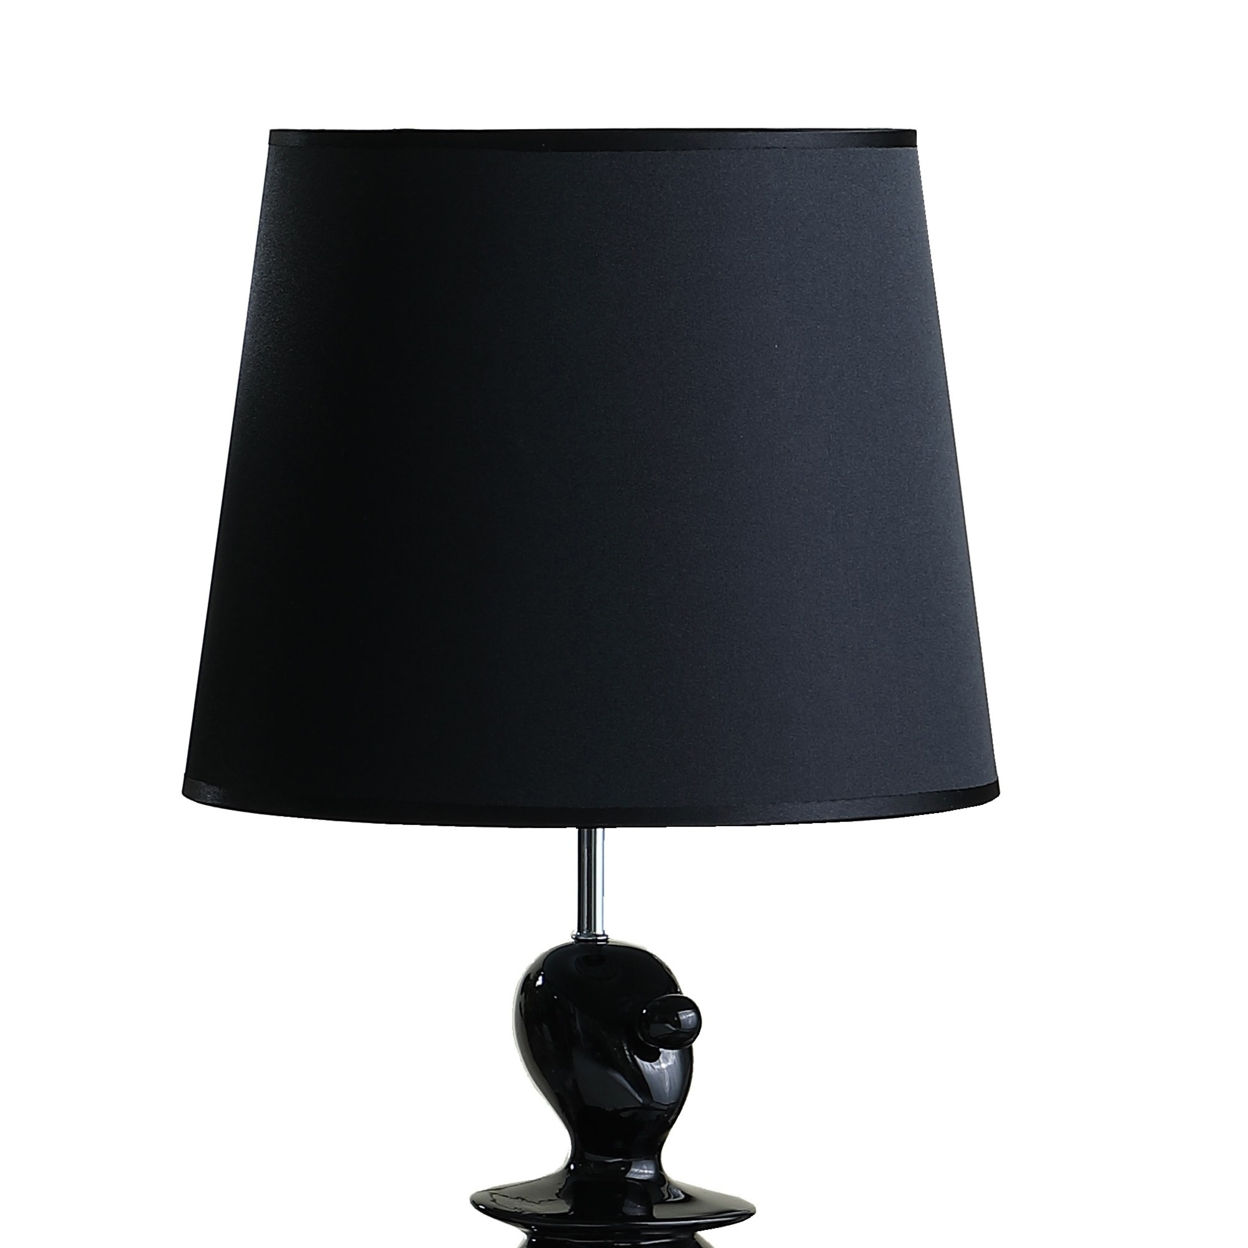 Fabric Shade Table Lamp With Polyresin Sitting Clown Base, Black- Saltoro Sherpi